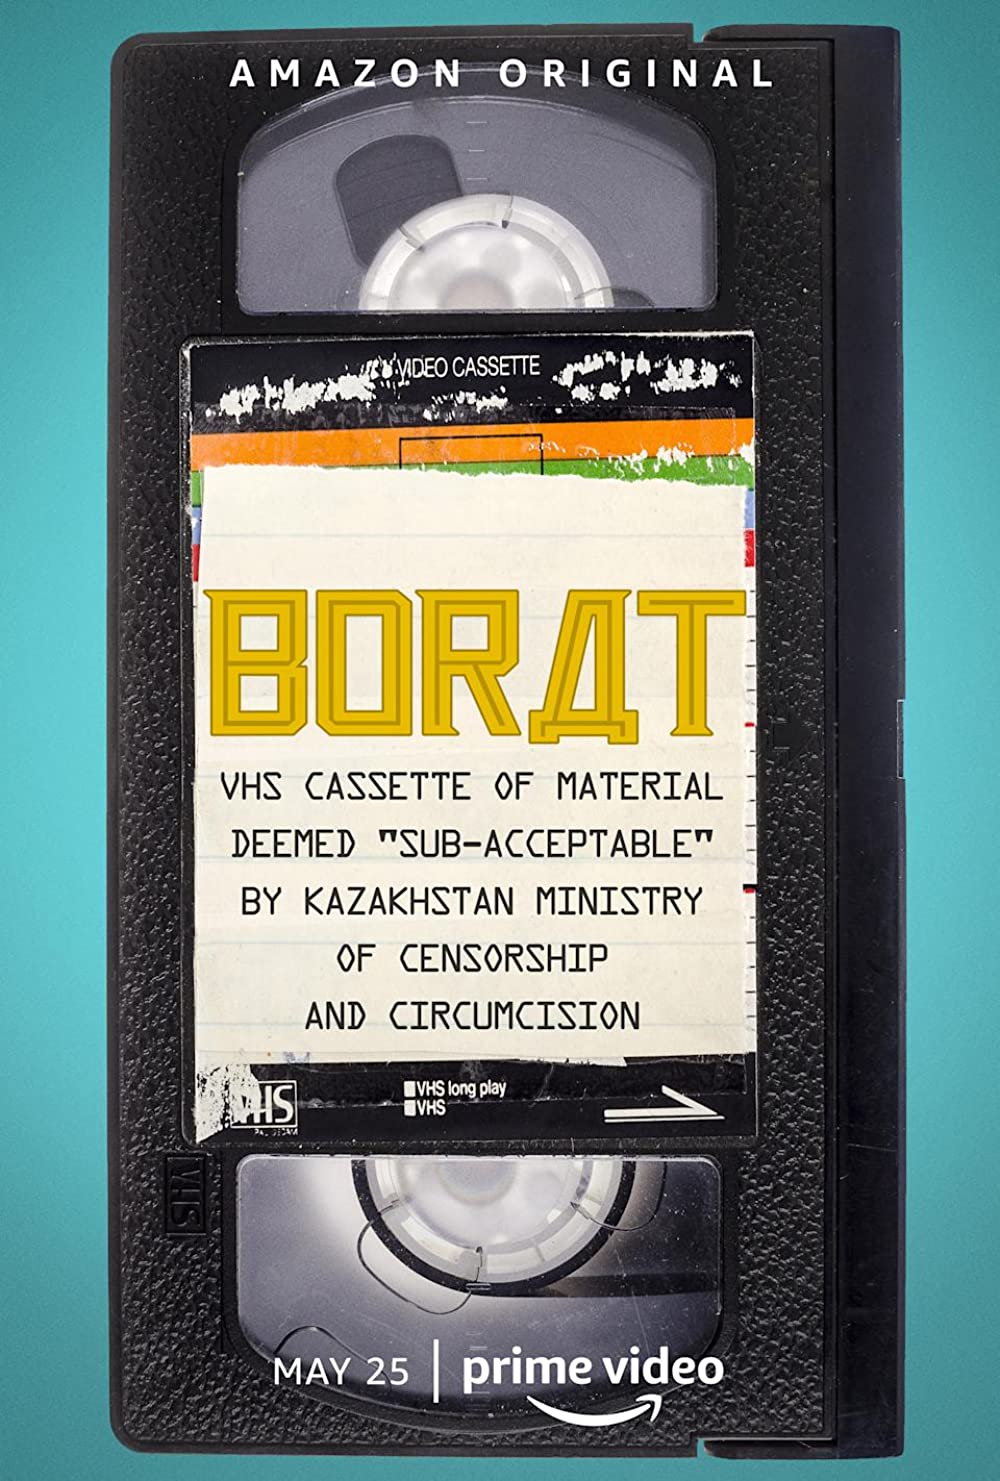 Filmbeschreibung zu Borat Supplemental Reportings Retrieved From Floor Of Stable Containing Editing Machine